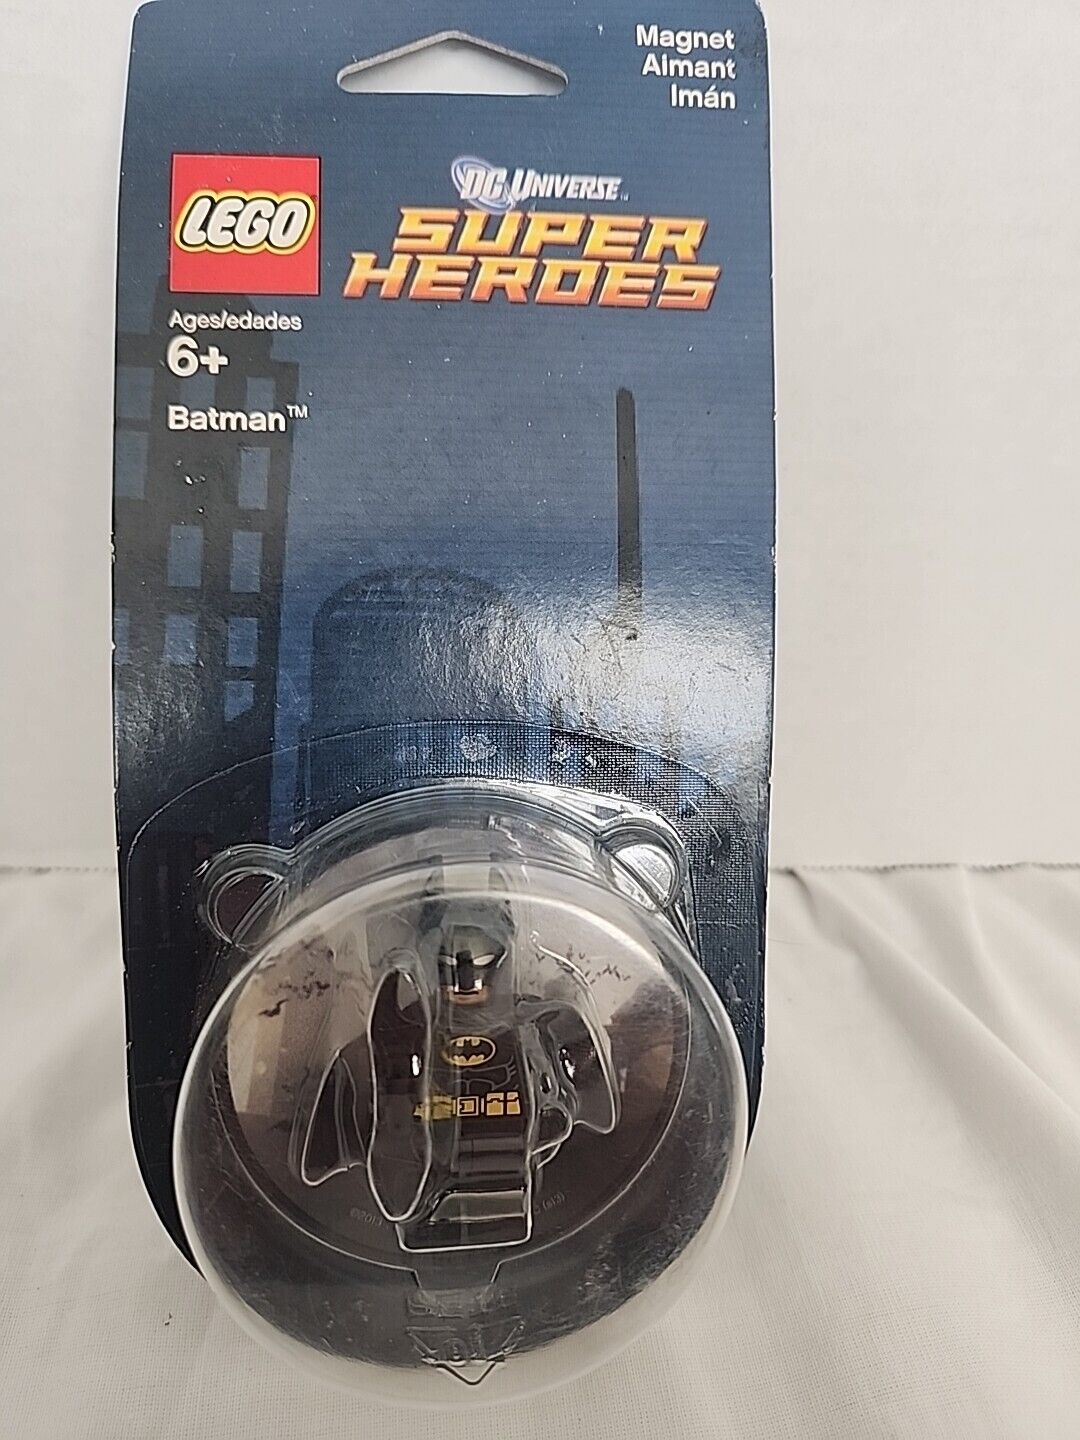 2013 Lego 850664 Batman Minifig Magnet Brand New DC Universe Super Heroes NIP